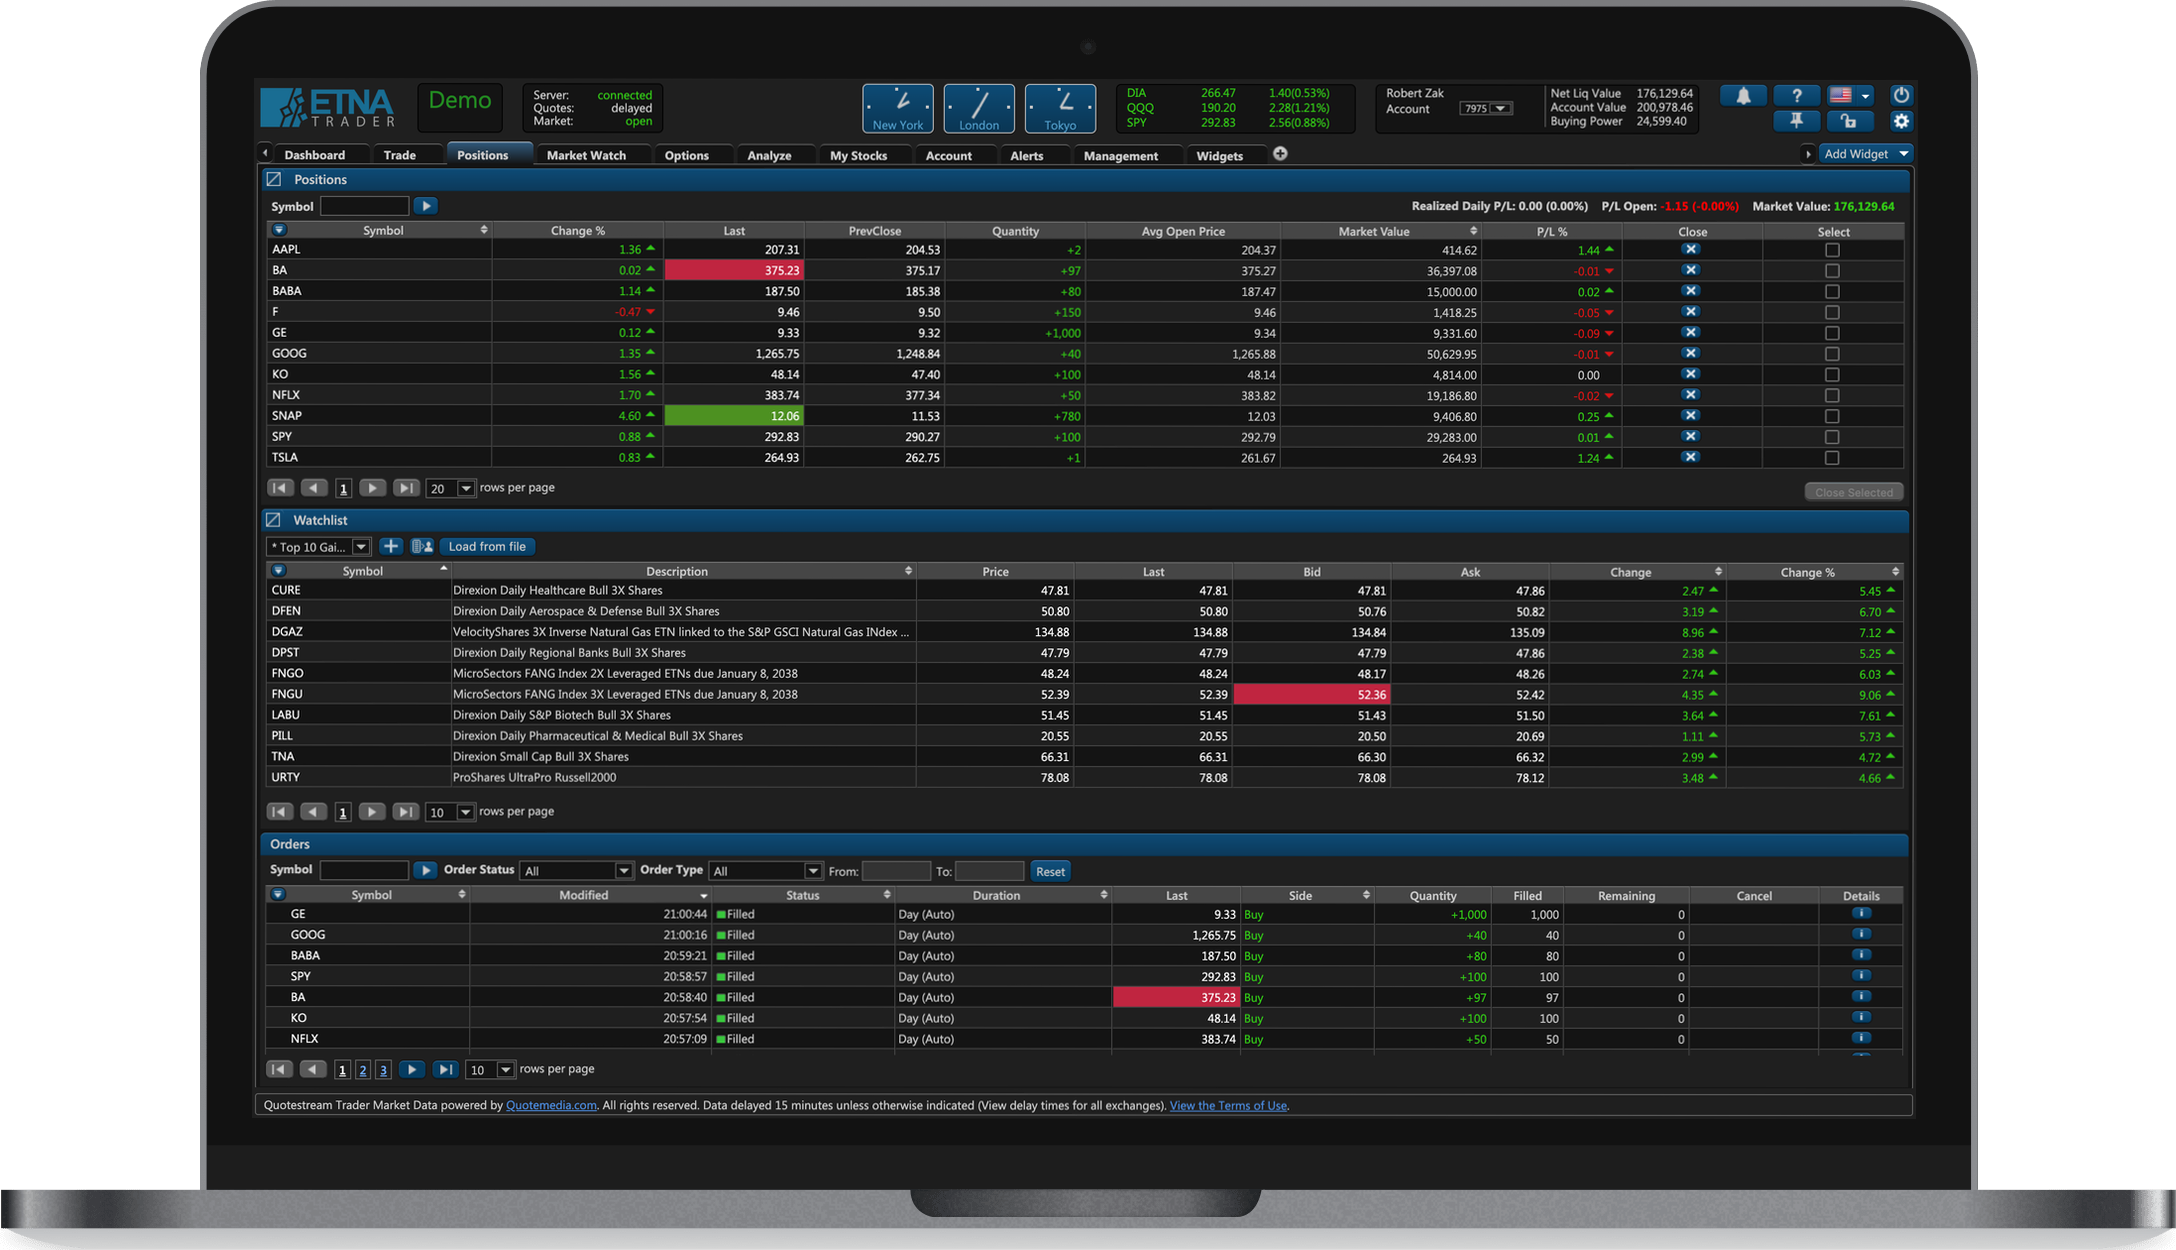 ETNA Web Platform for Paper Trading Stocks and Options Simulator